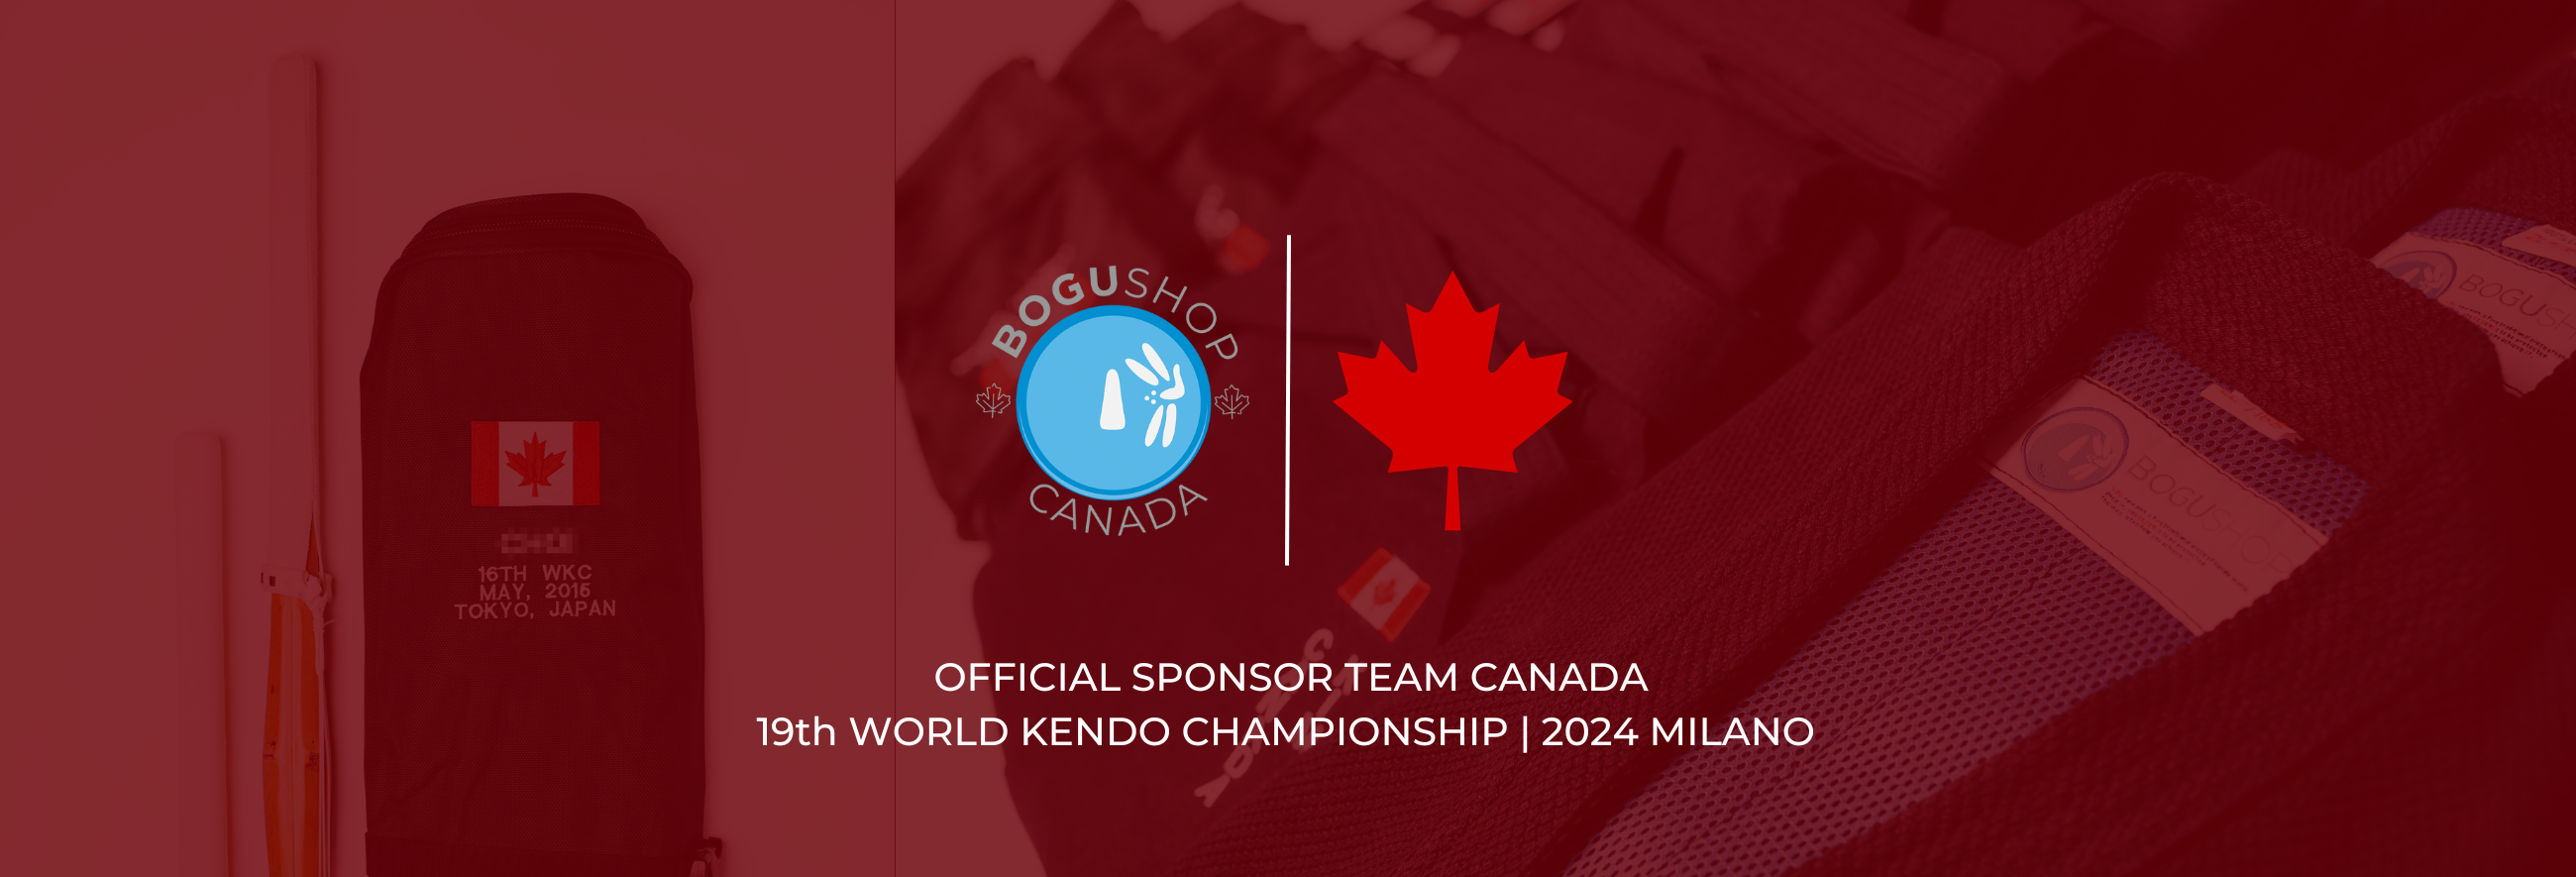 Bogushop Team Canada Kendo Sponsor